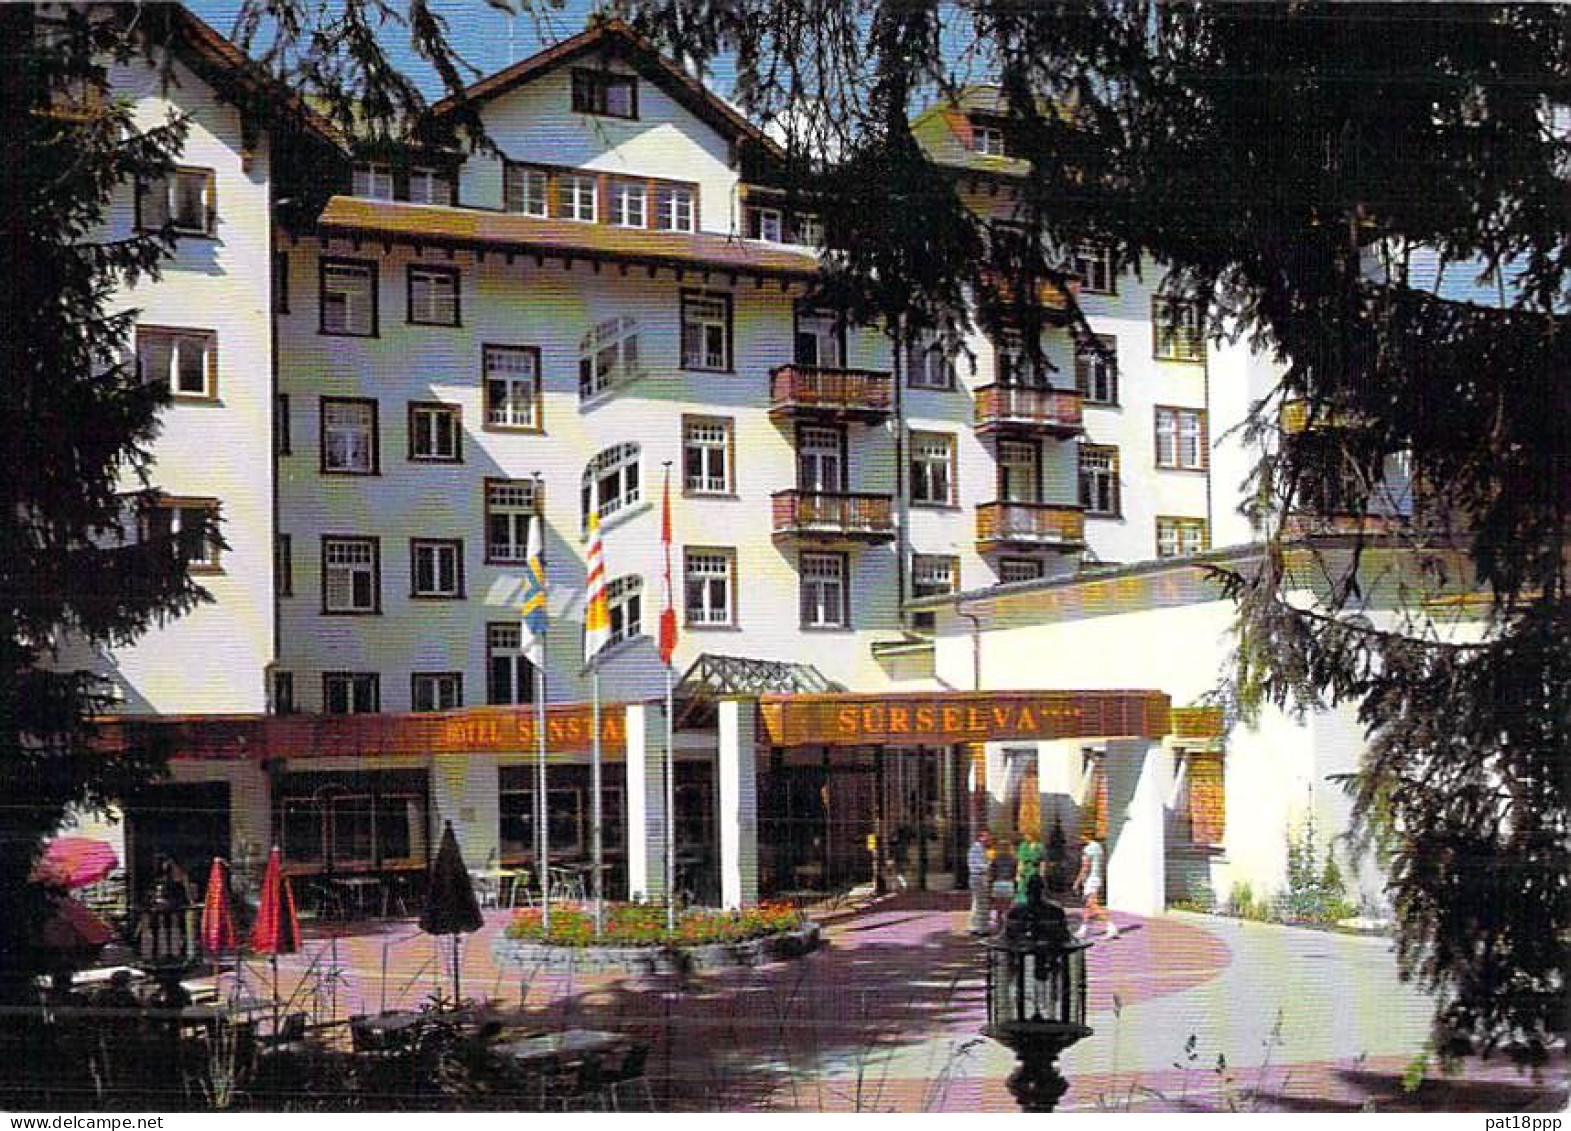 SUISSE - Lot de 10 CPSM GF HOTEL RESTAURANT : GR Canton des GRISONS (0.20 €/carte) Swiss Switzerland Schweiz Zwitsers